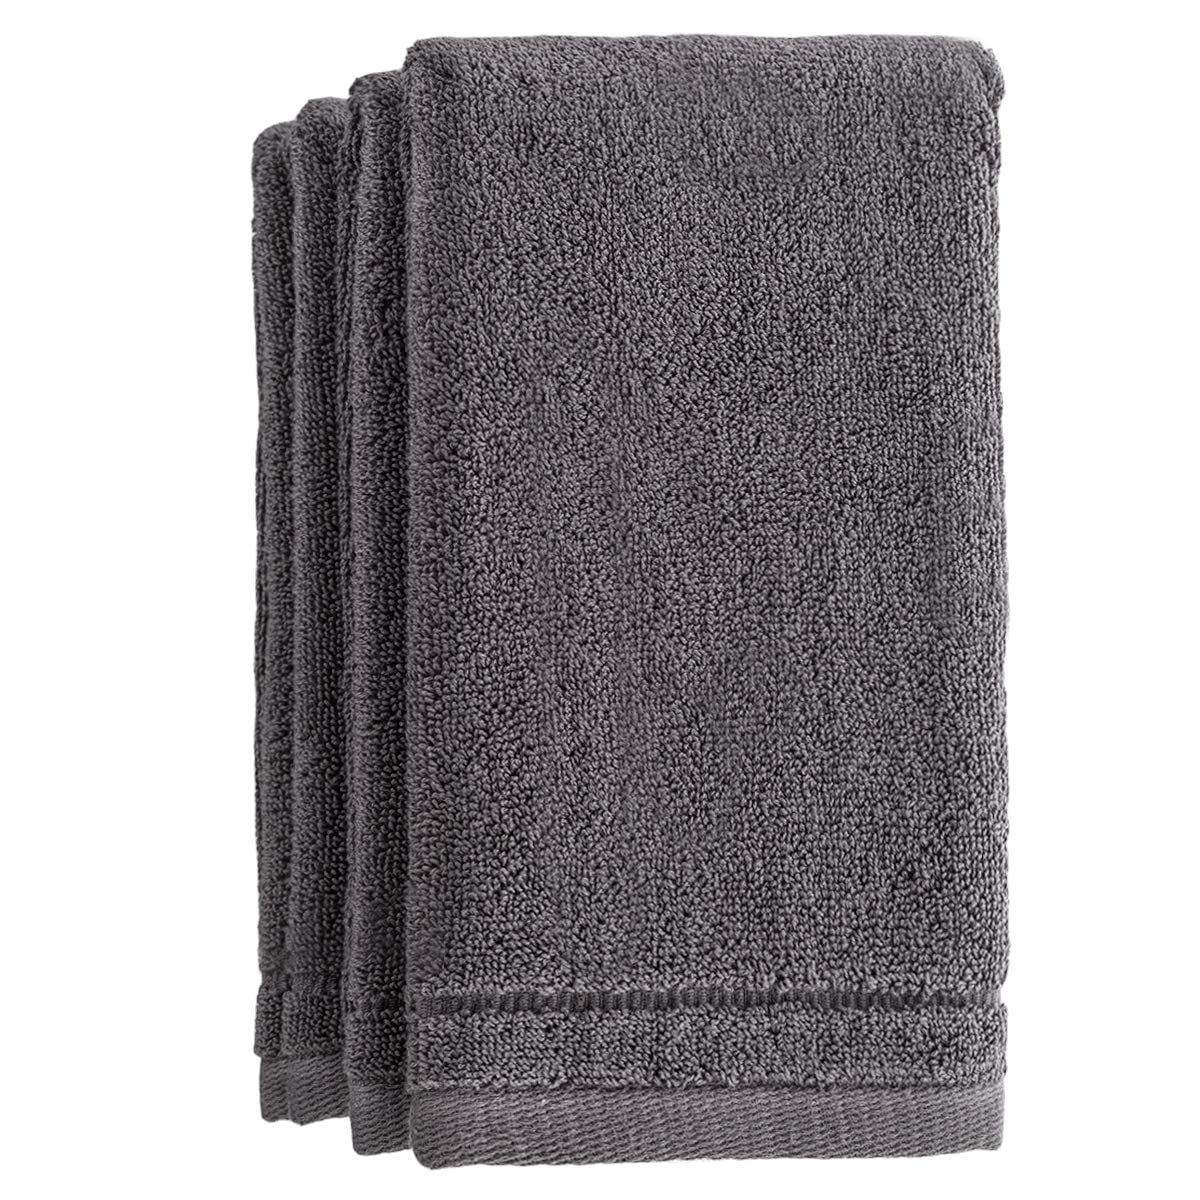 Set of 4 Fingertip Towels 11" x 18" Bathroom Decorative Golden Brown 100% Cotton 